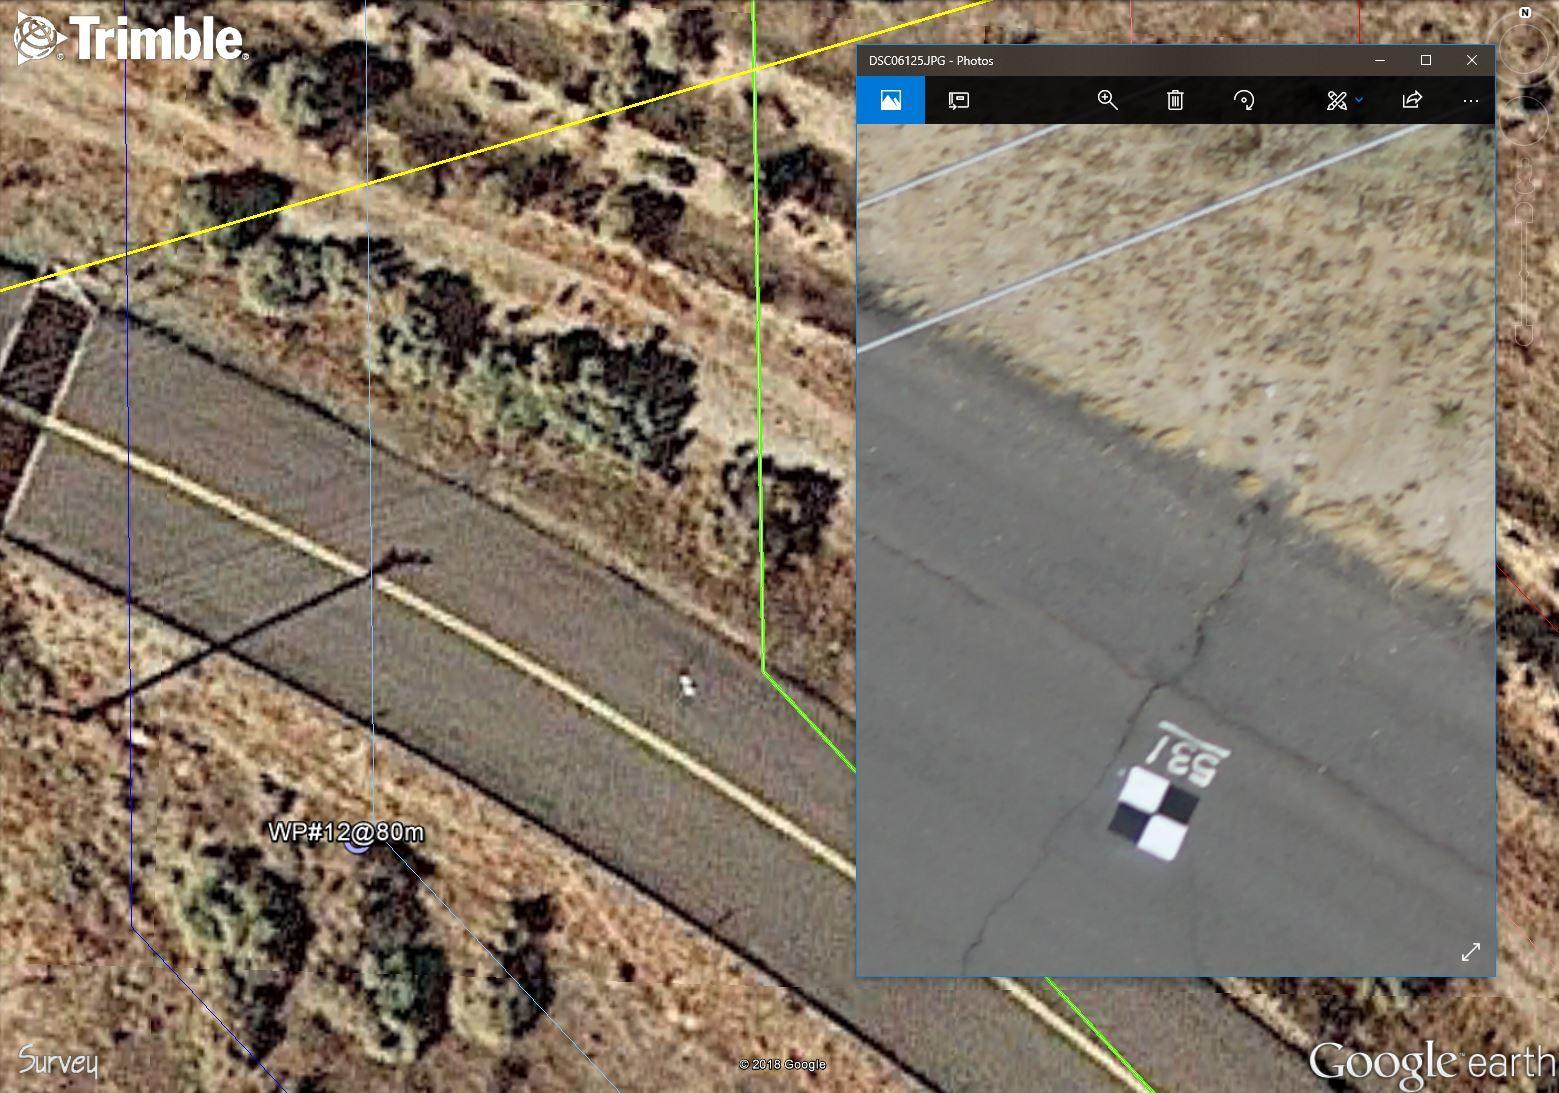 Google Earth vs. Drones